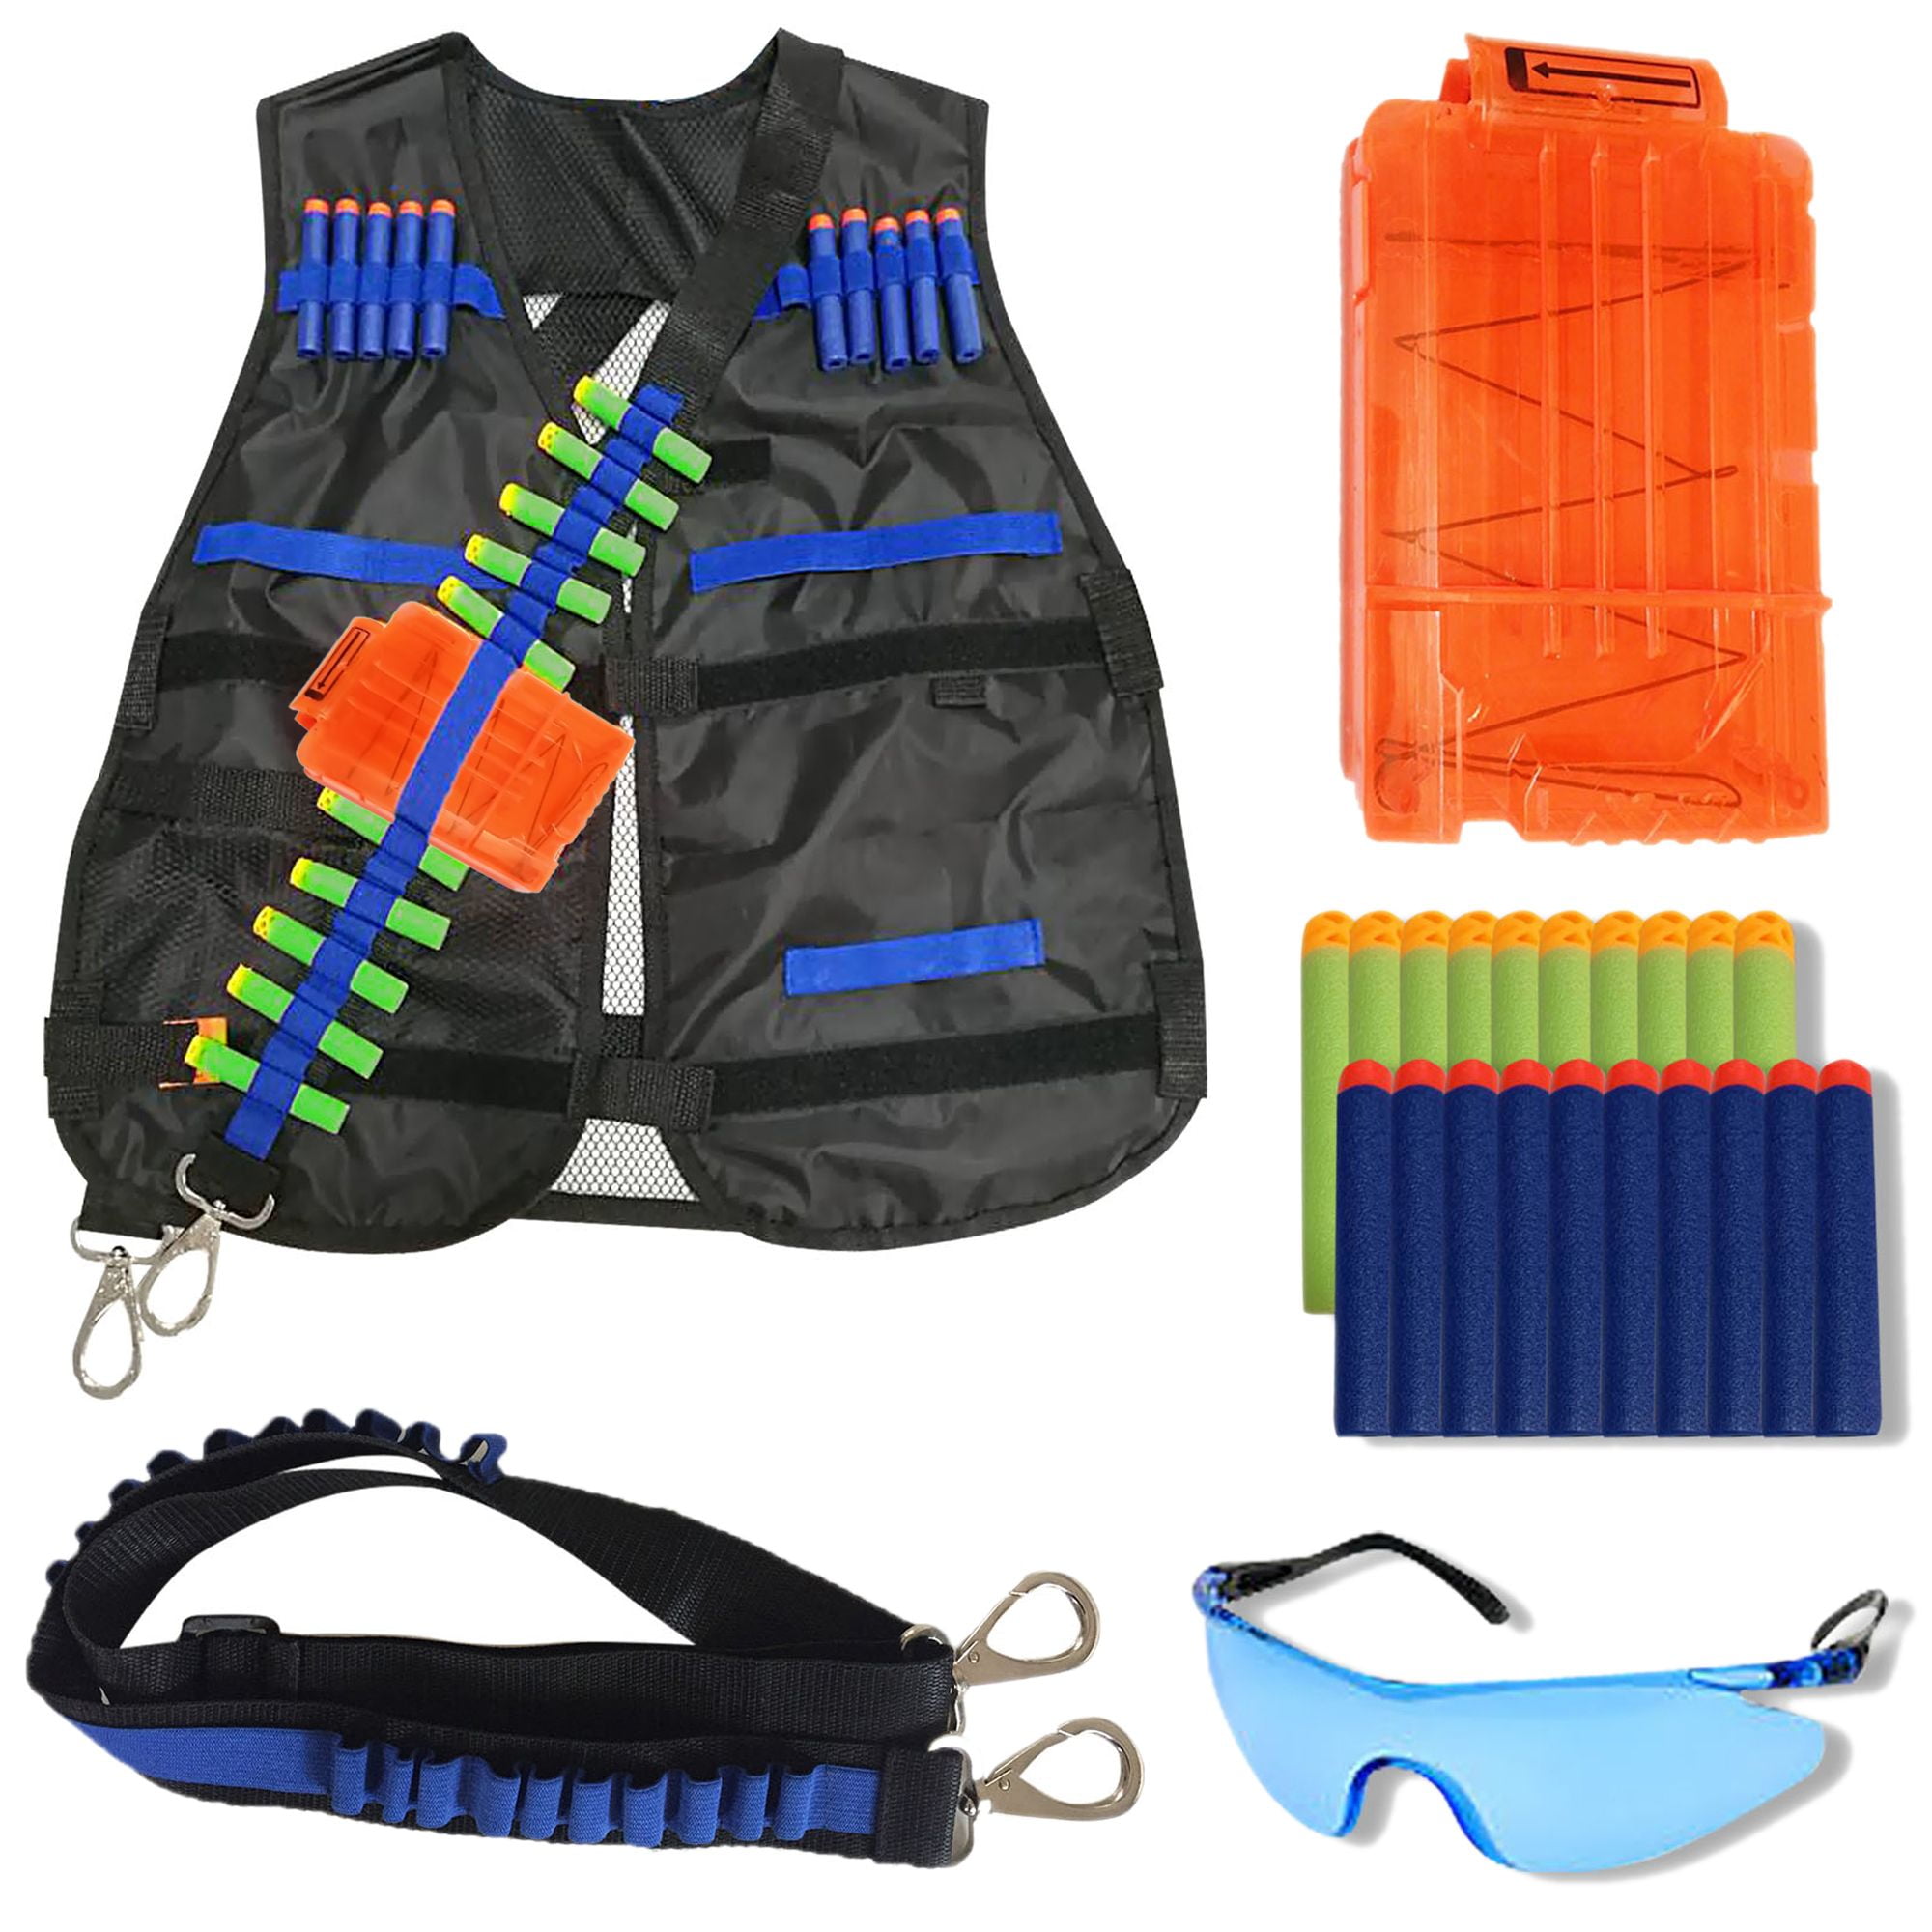 Details about   Kids Tactical Vest For Nerf Tactical Vest Guns Kid Vest Suit Kit Set outdoor New 